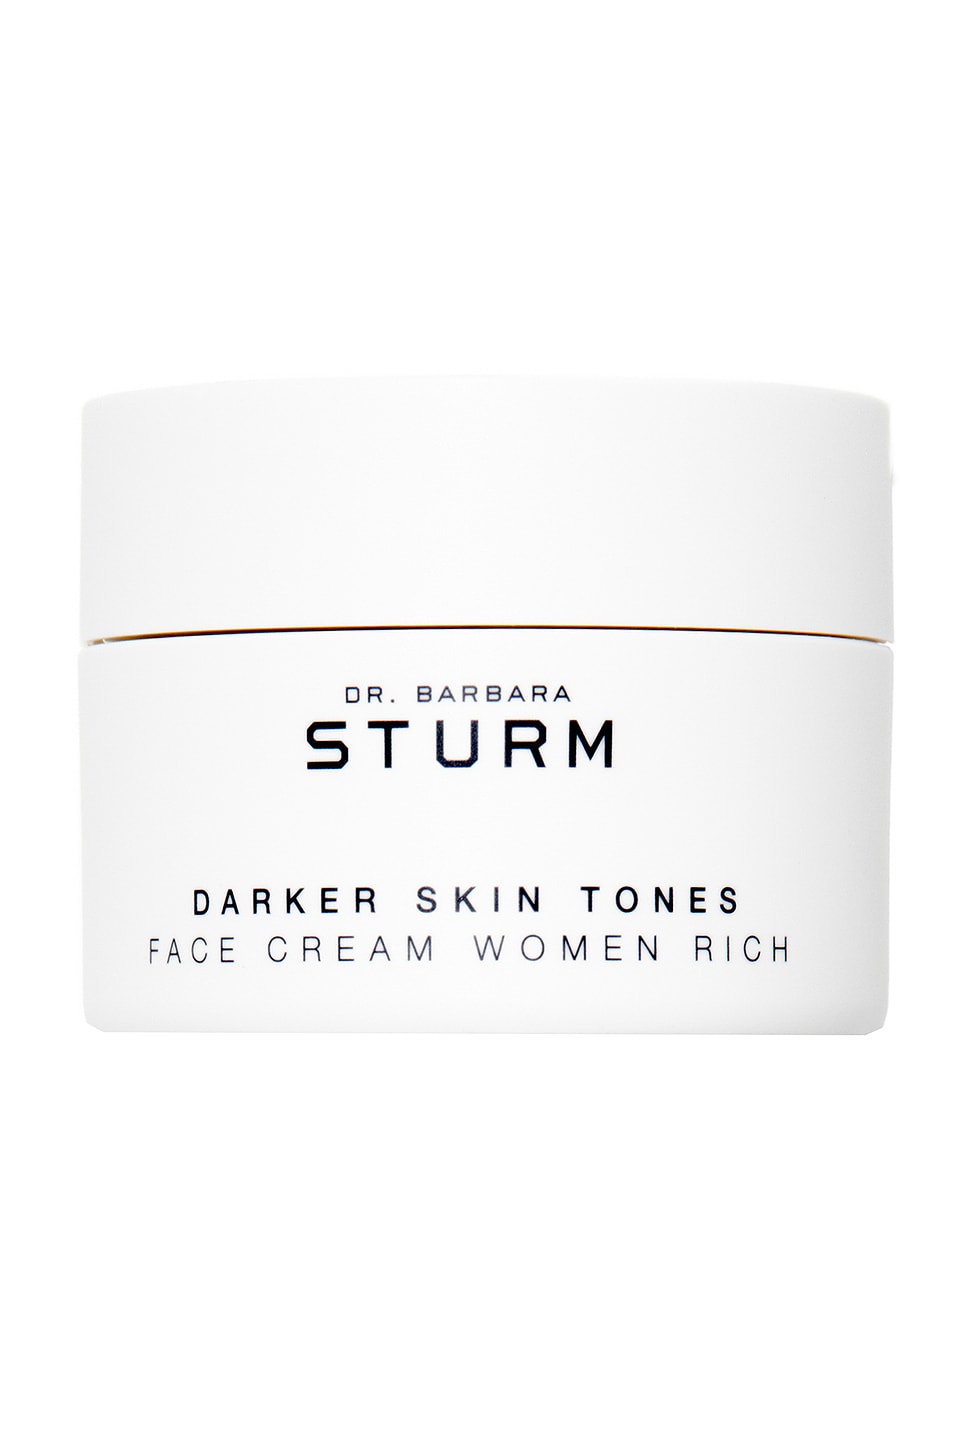 Dr Barbara Sturm Darker Skin Tones Face Cream Rich In White